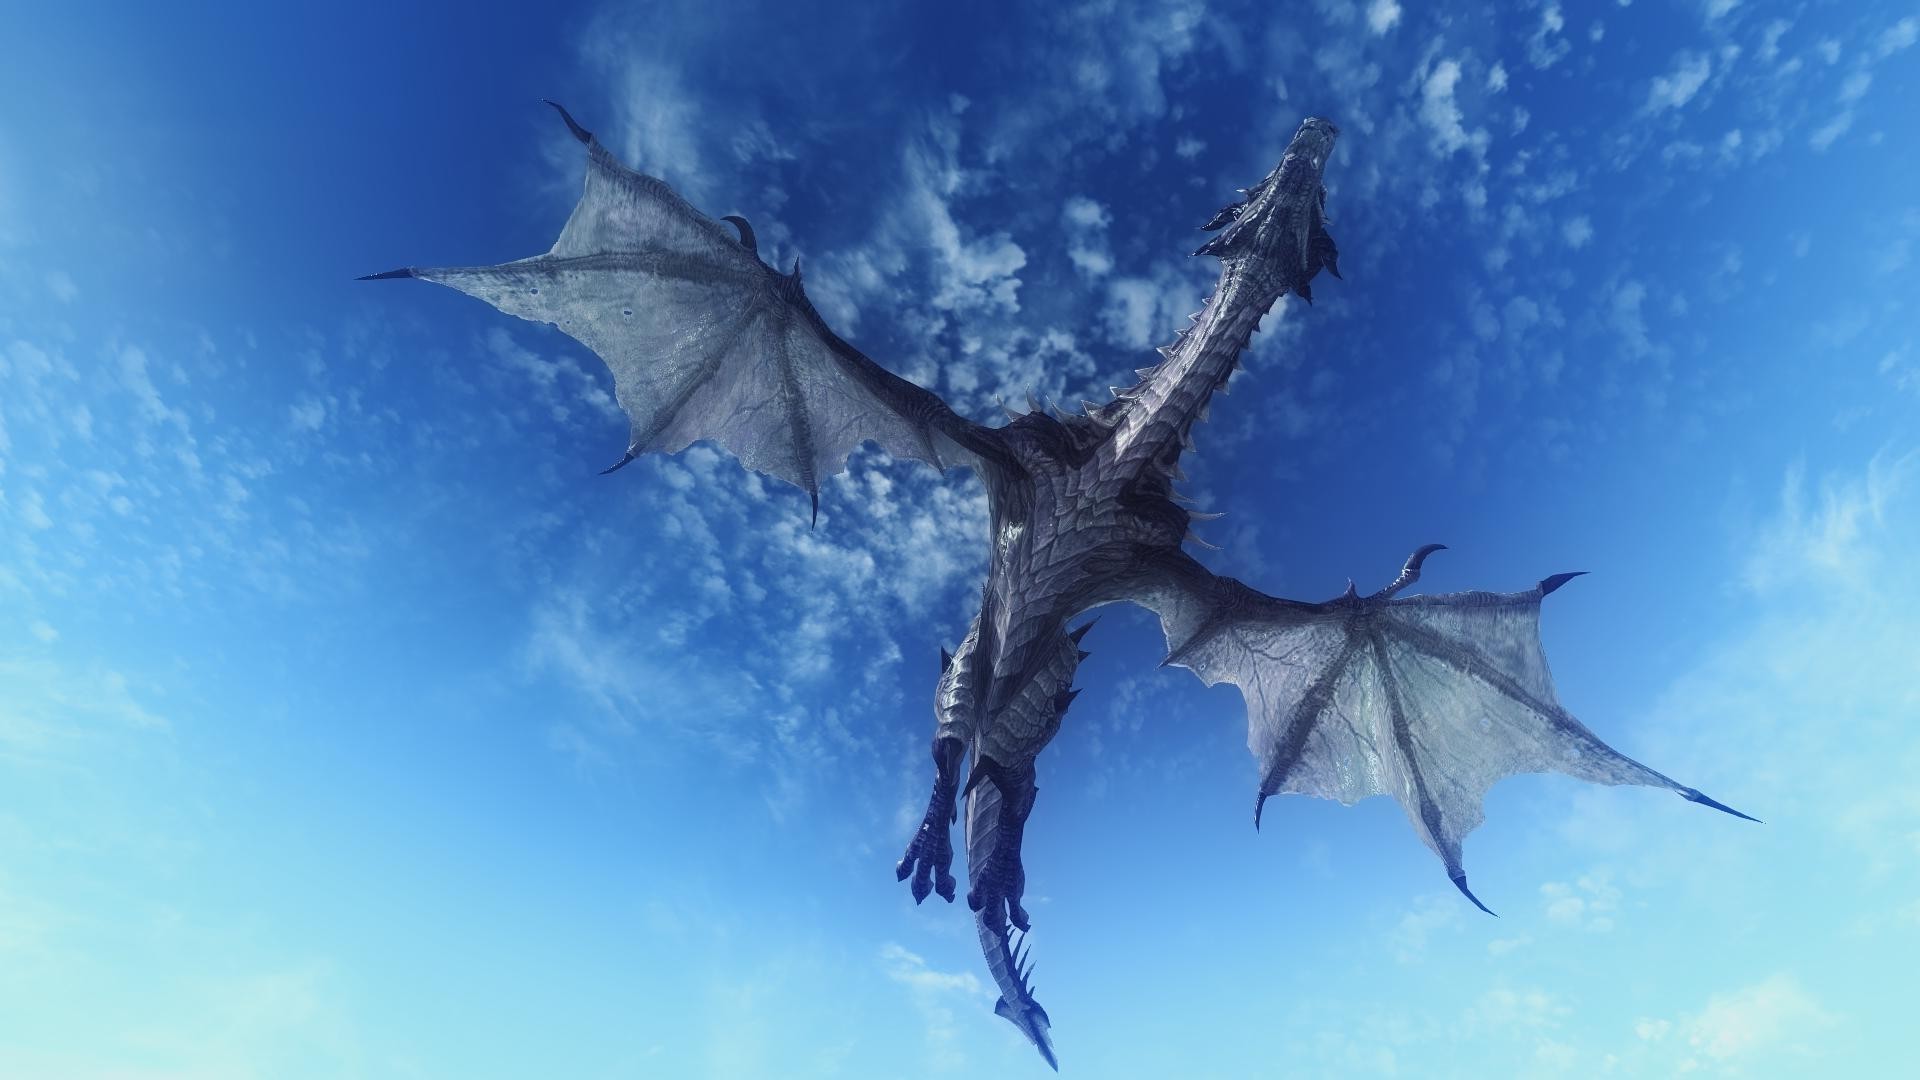 fantasy Art, Dragon, Flying, Sky, Dragon Wings, Tail, Clouds, Digital Art, Scales, Claws, The Elder Scrolls V: Skyrim Wallpaper